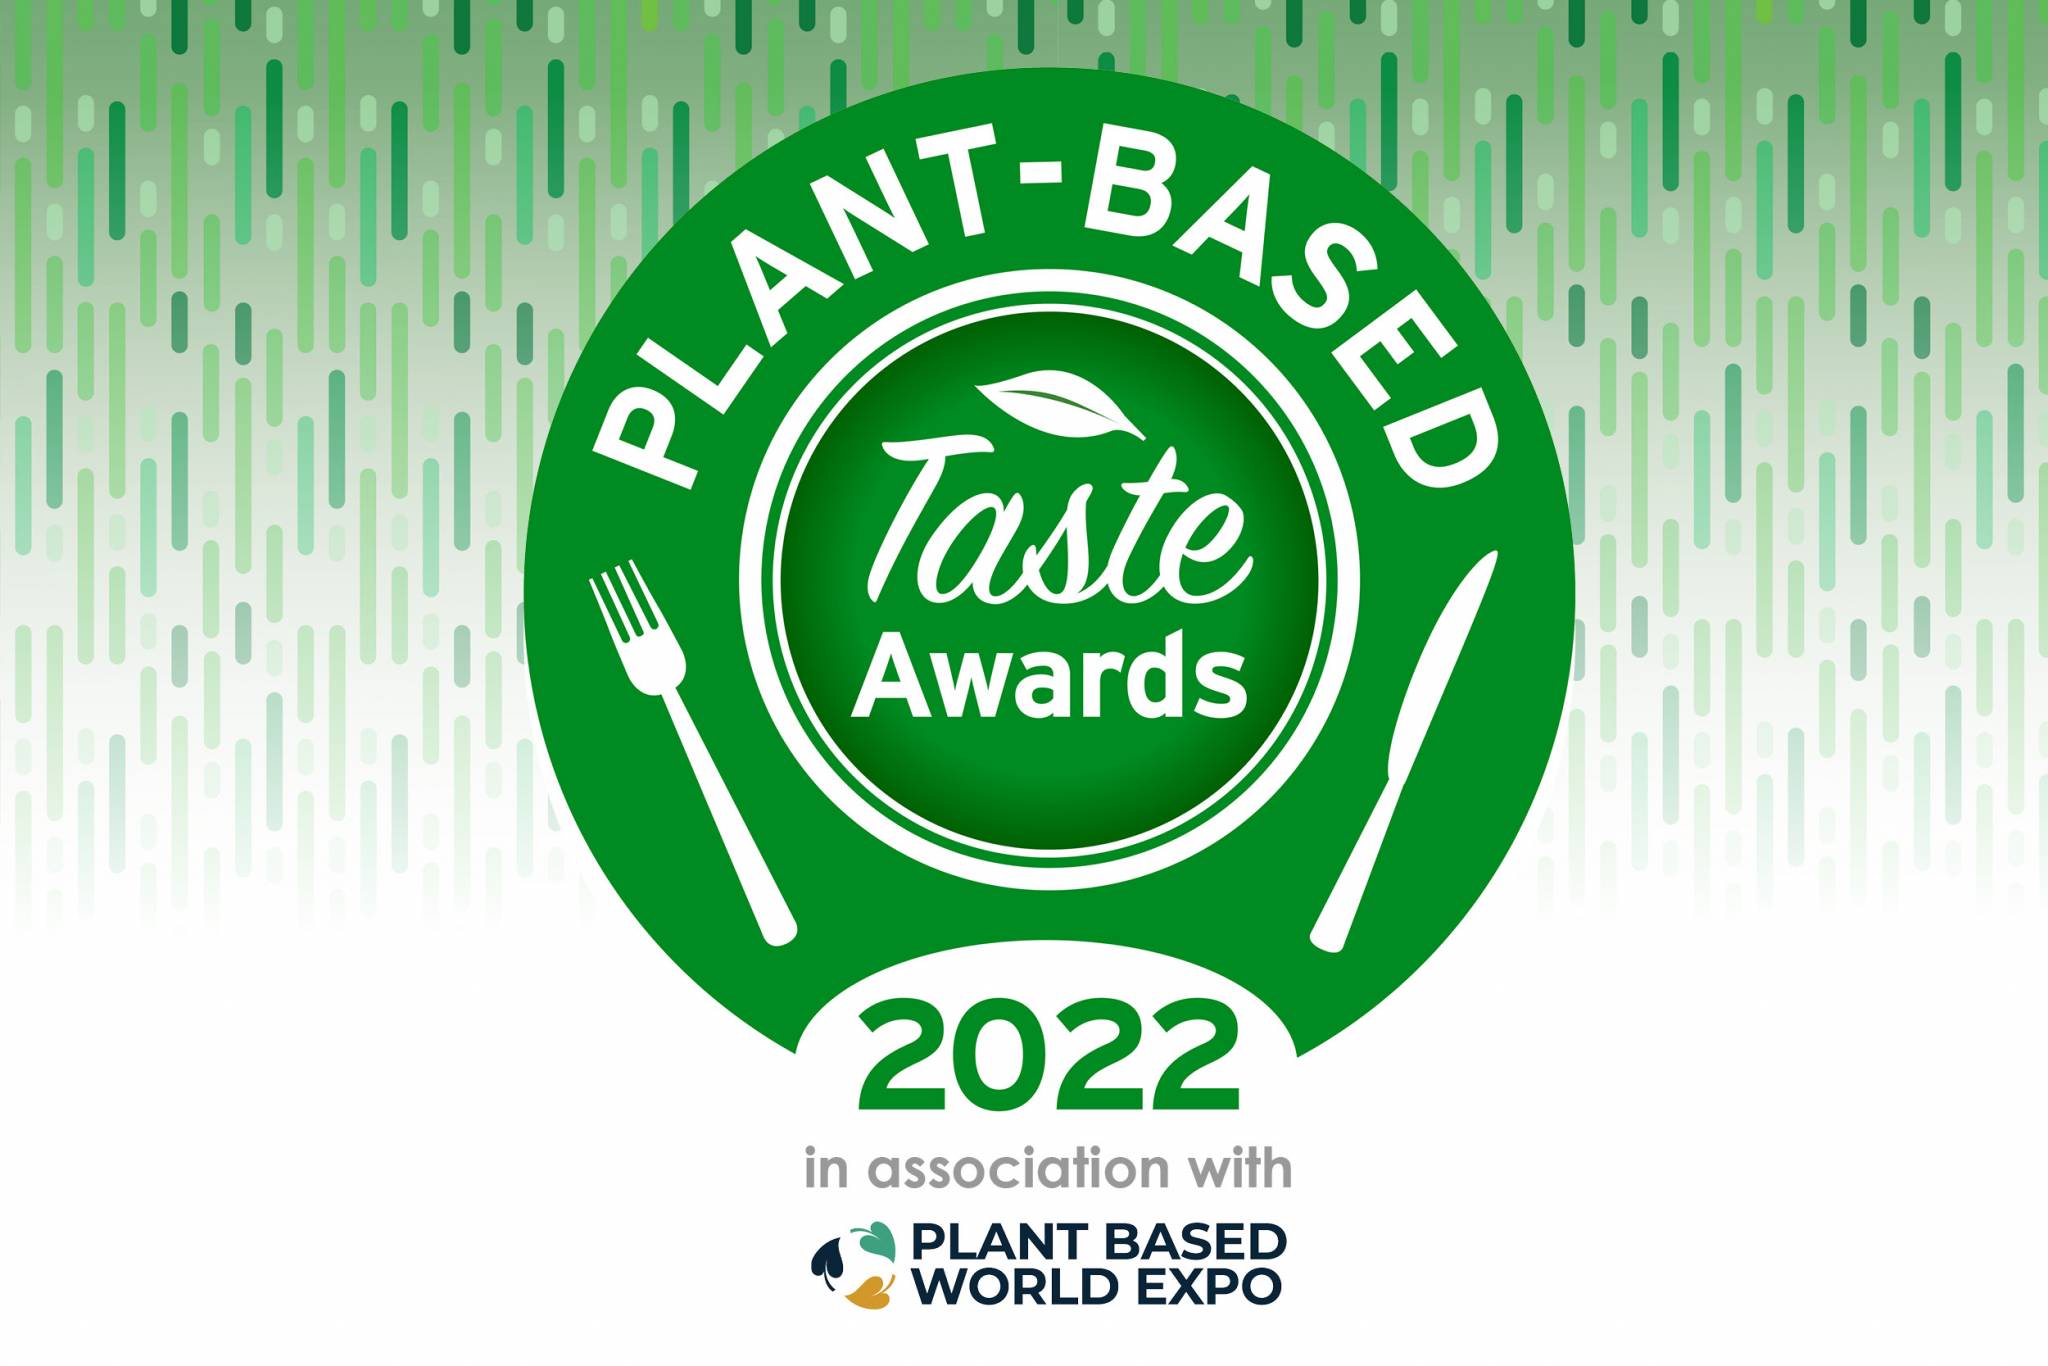 Plant-Based Taste Awards are now live!